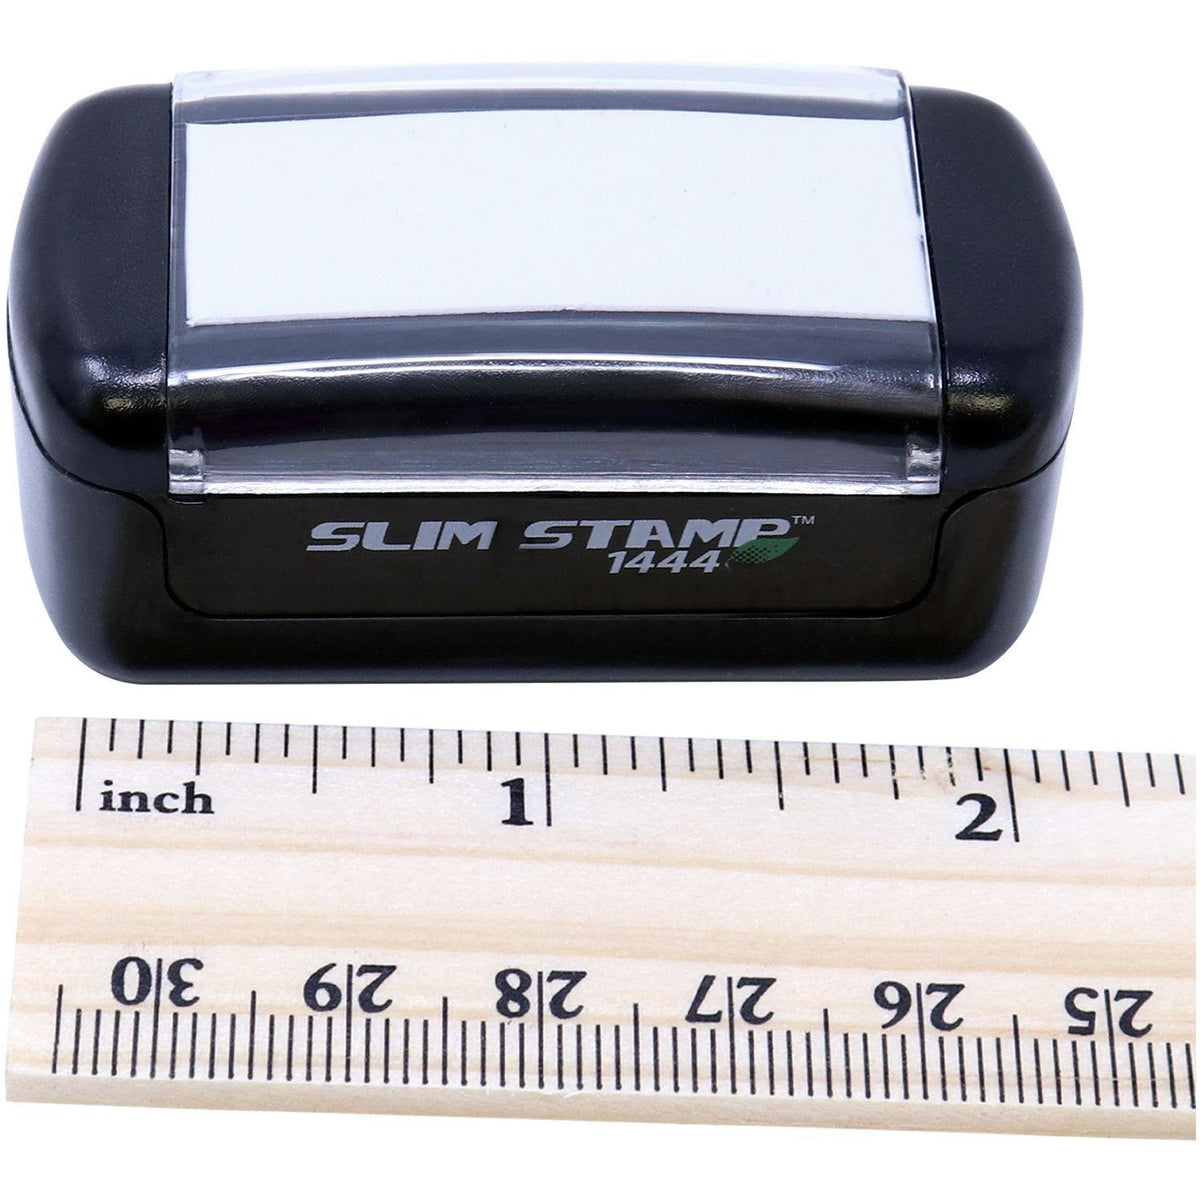 Measurement Slim Pre-Inked Please See Me Stamp with Ruler